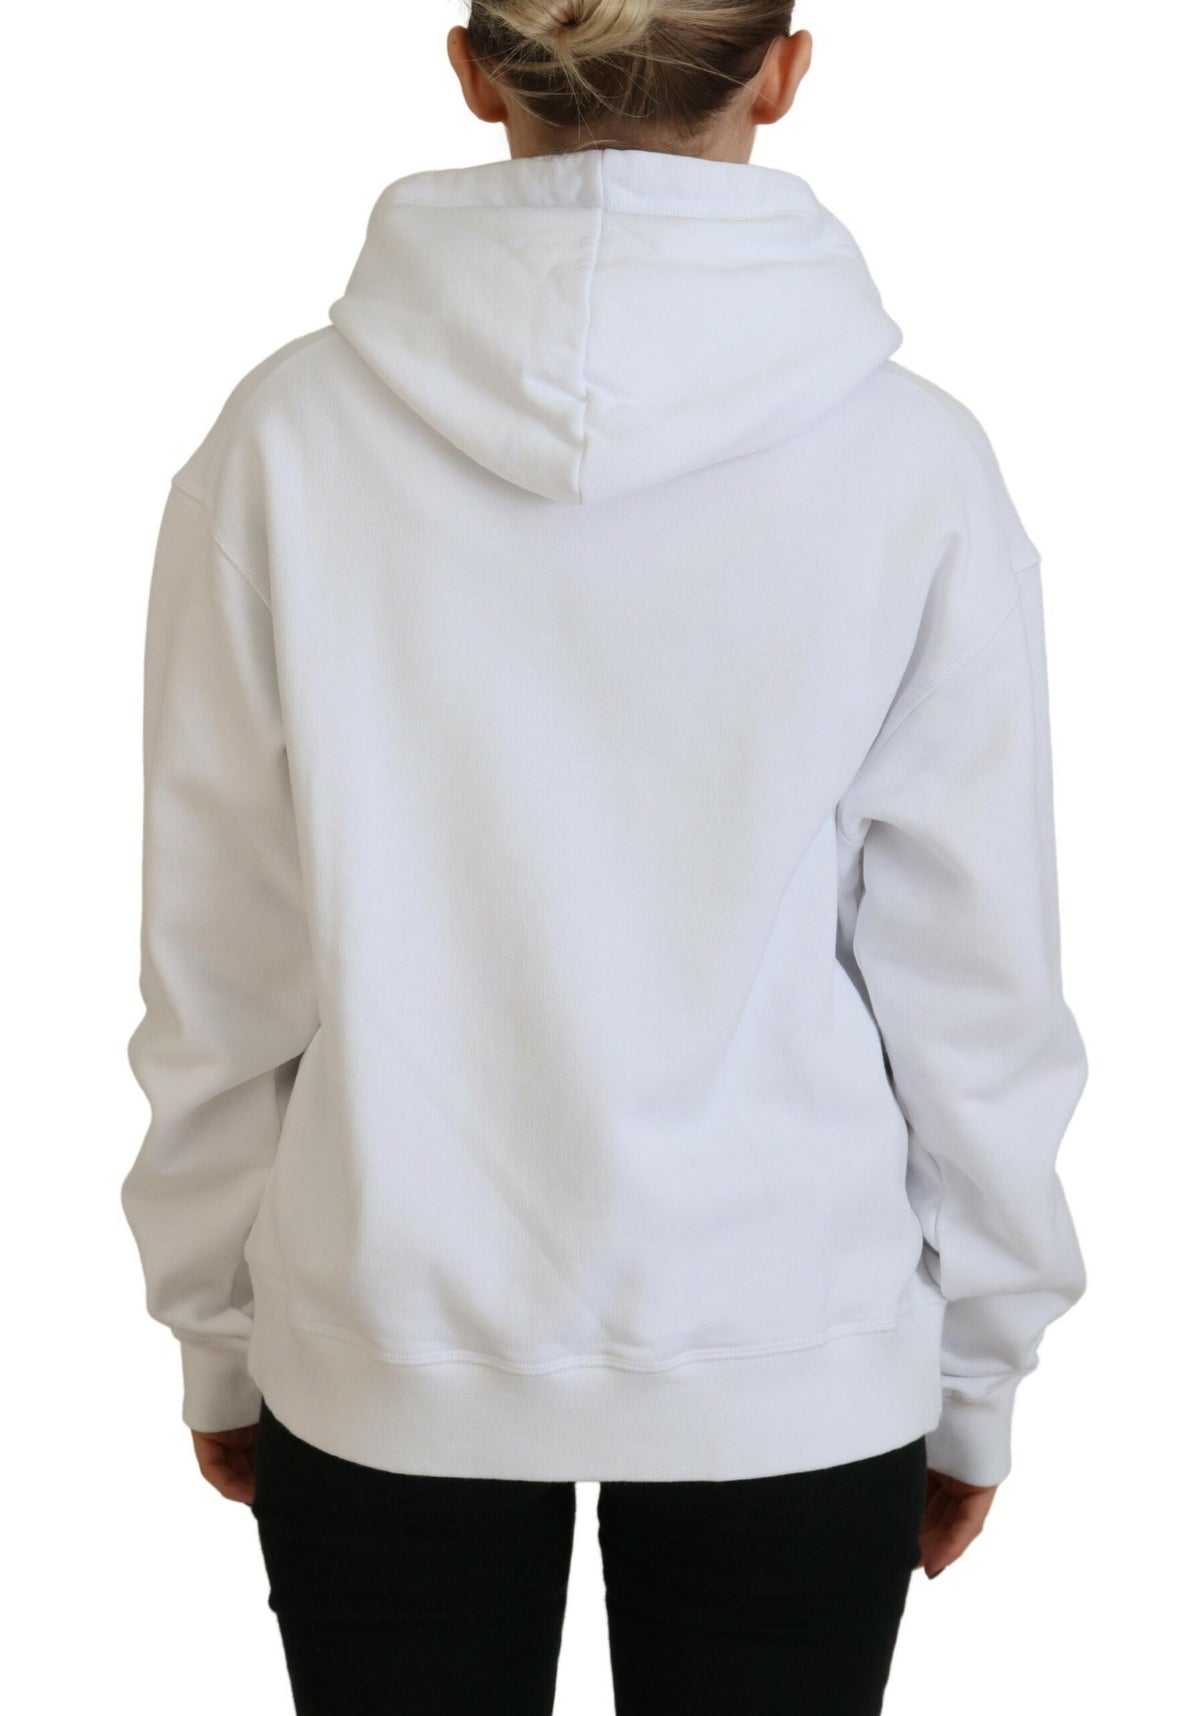 Dsquared² White Logo Patch Cotton Hoodie Sweatshirt Sweater